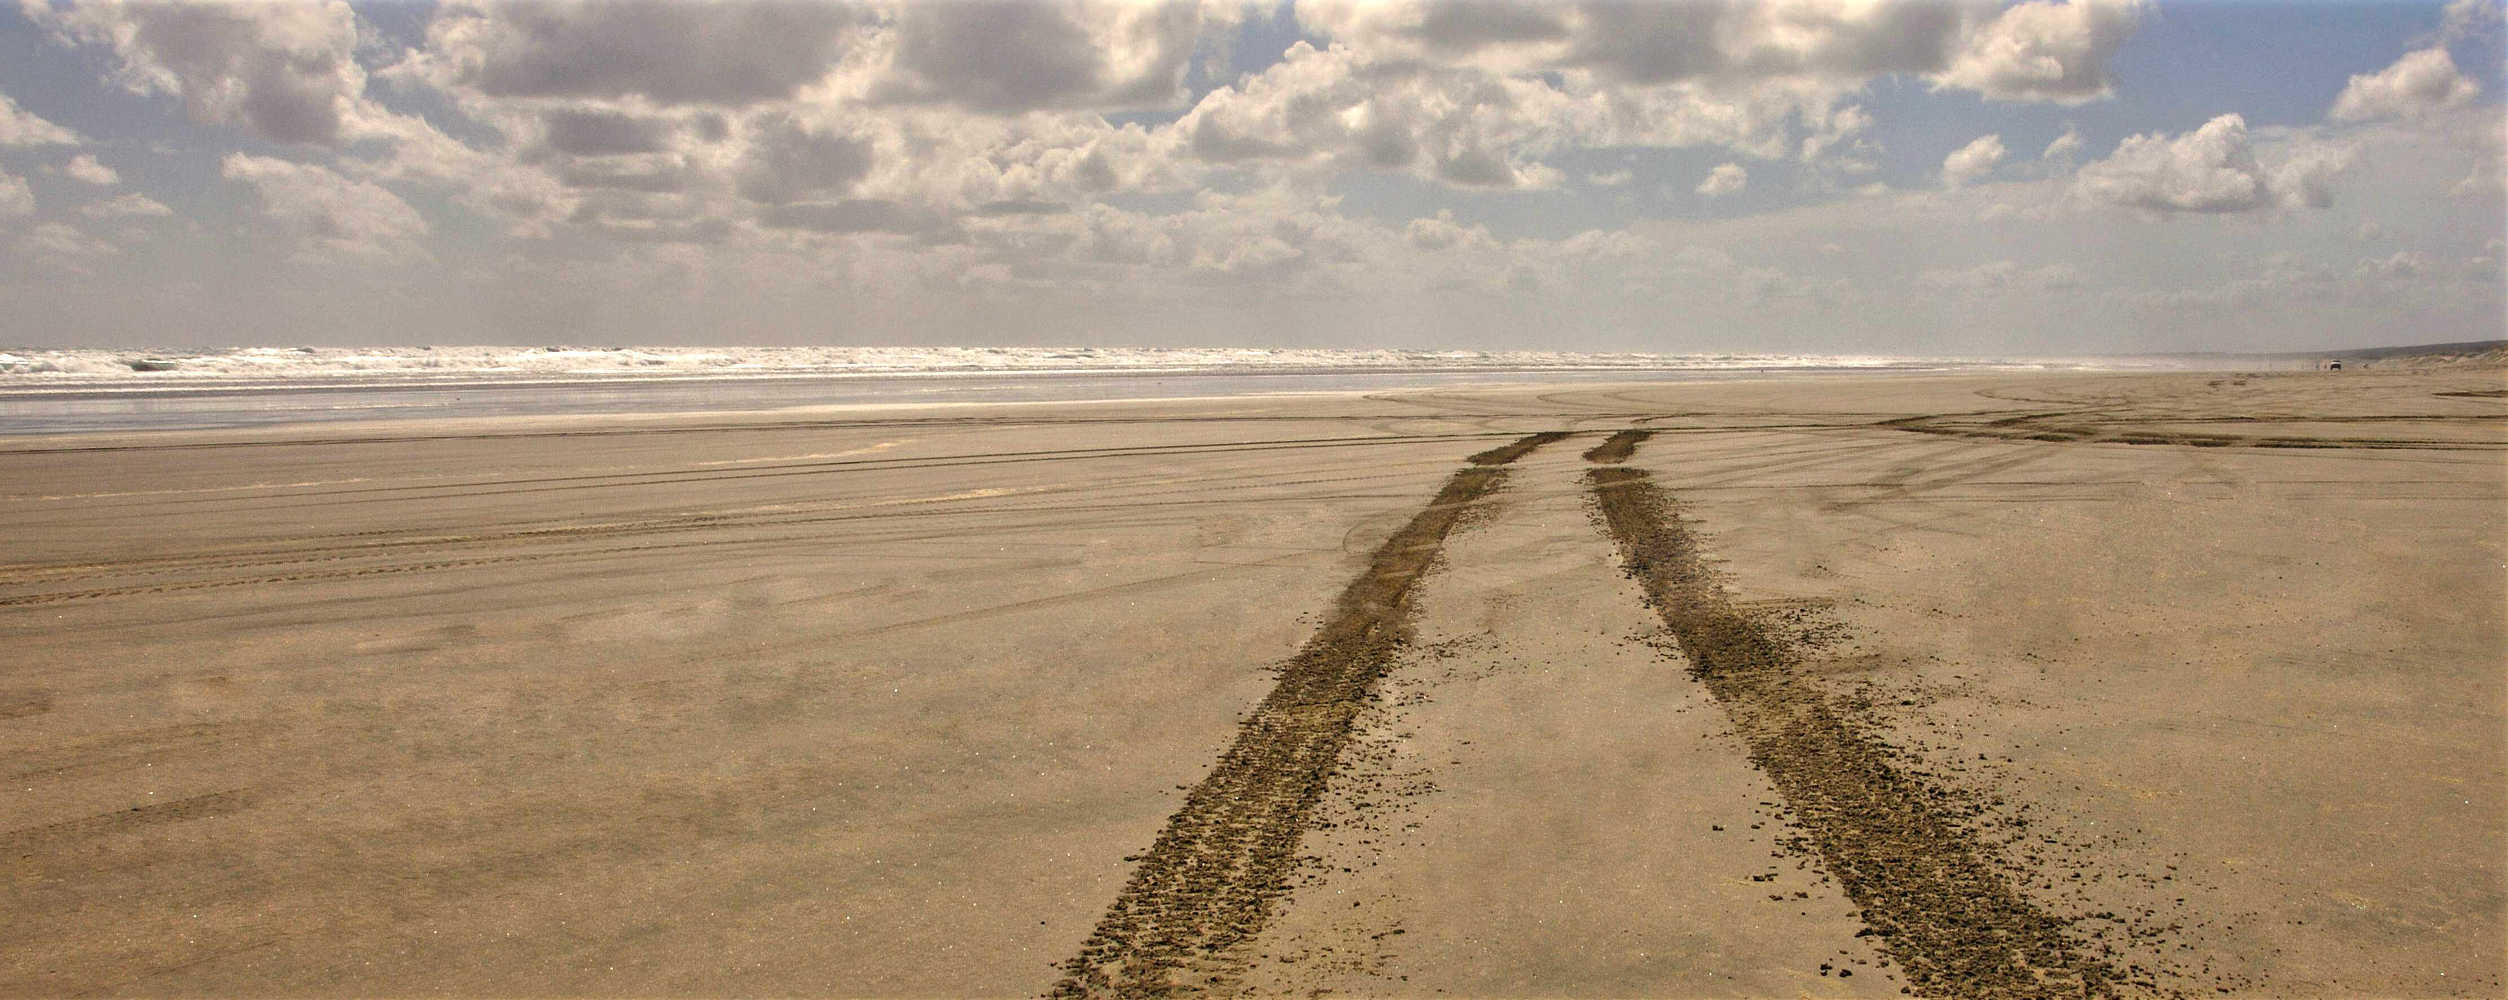 Ninety Mile Beach legal road, Northland, New Zealand